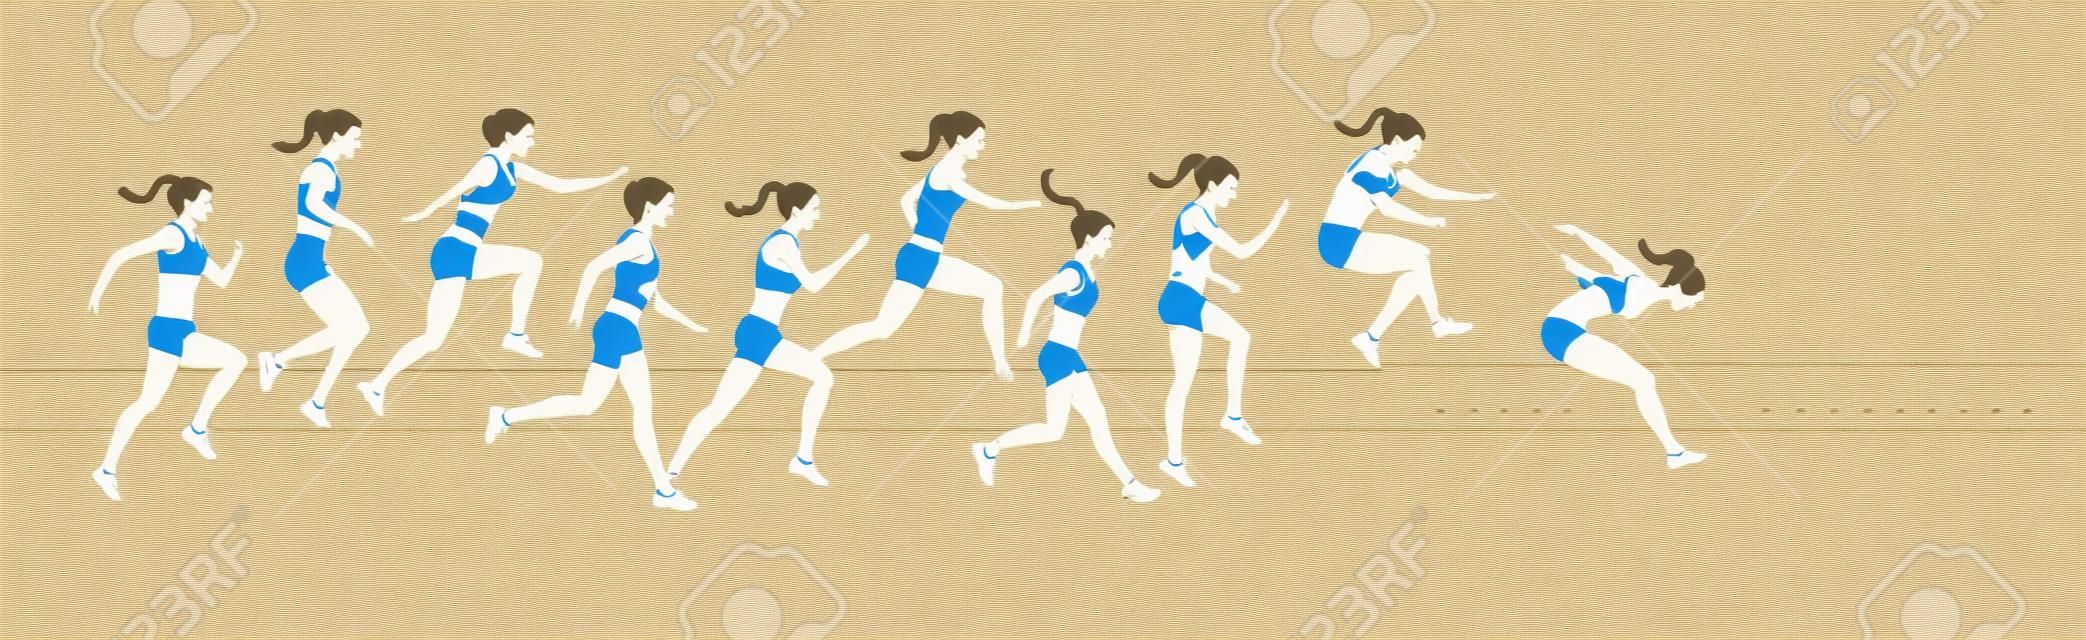 Triple jump moves illustration. Woman jumps in uniform.